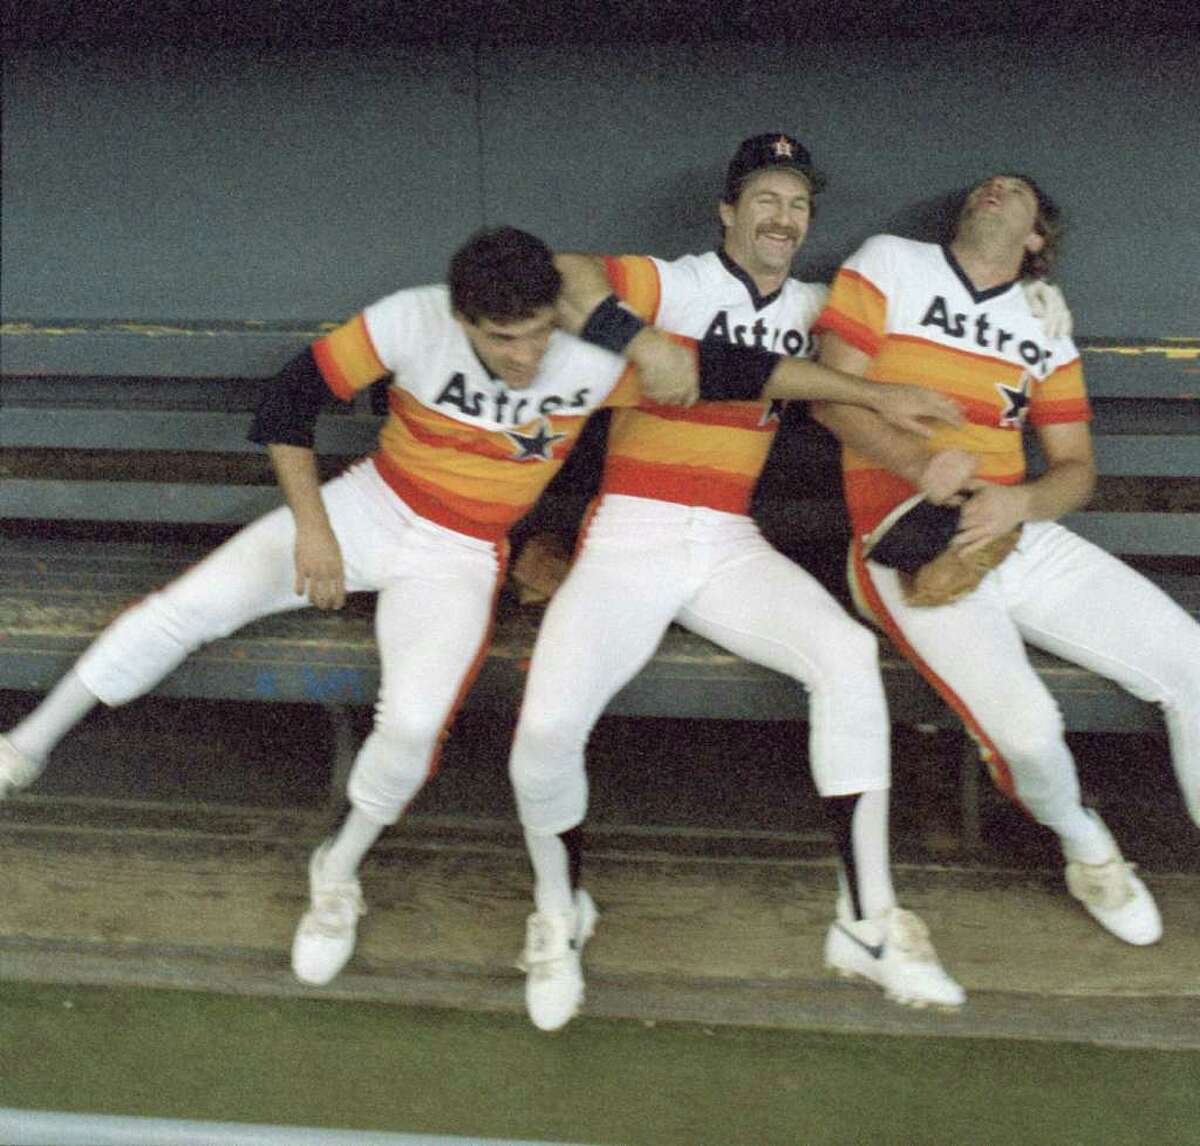 Ron Paul stars in Astros rainbow uniform at '76 Congressional ballgame